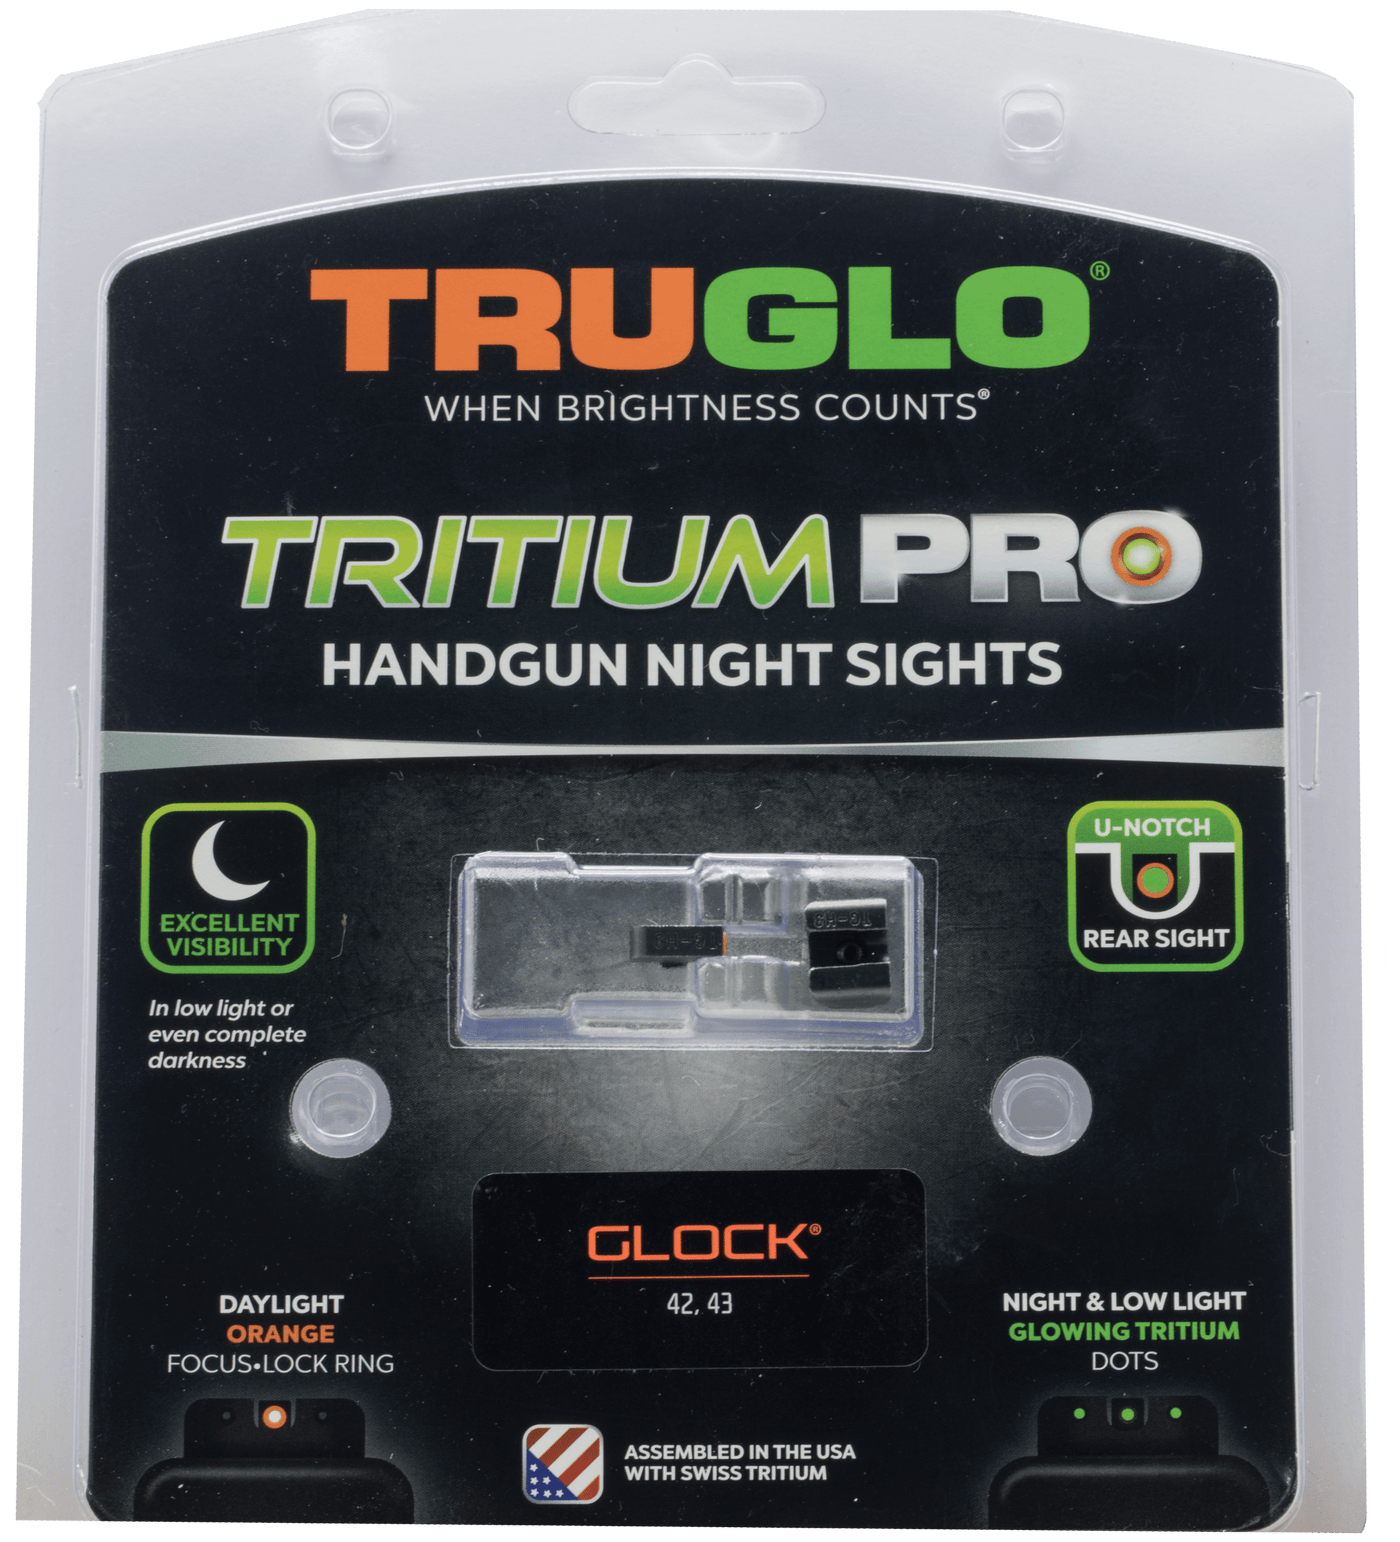 Truglo Truglo Tritium Pro Handgun Sights Smith & Wesson M&p Set Firearm Accessories